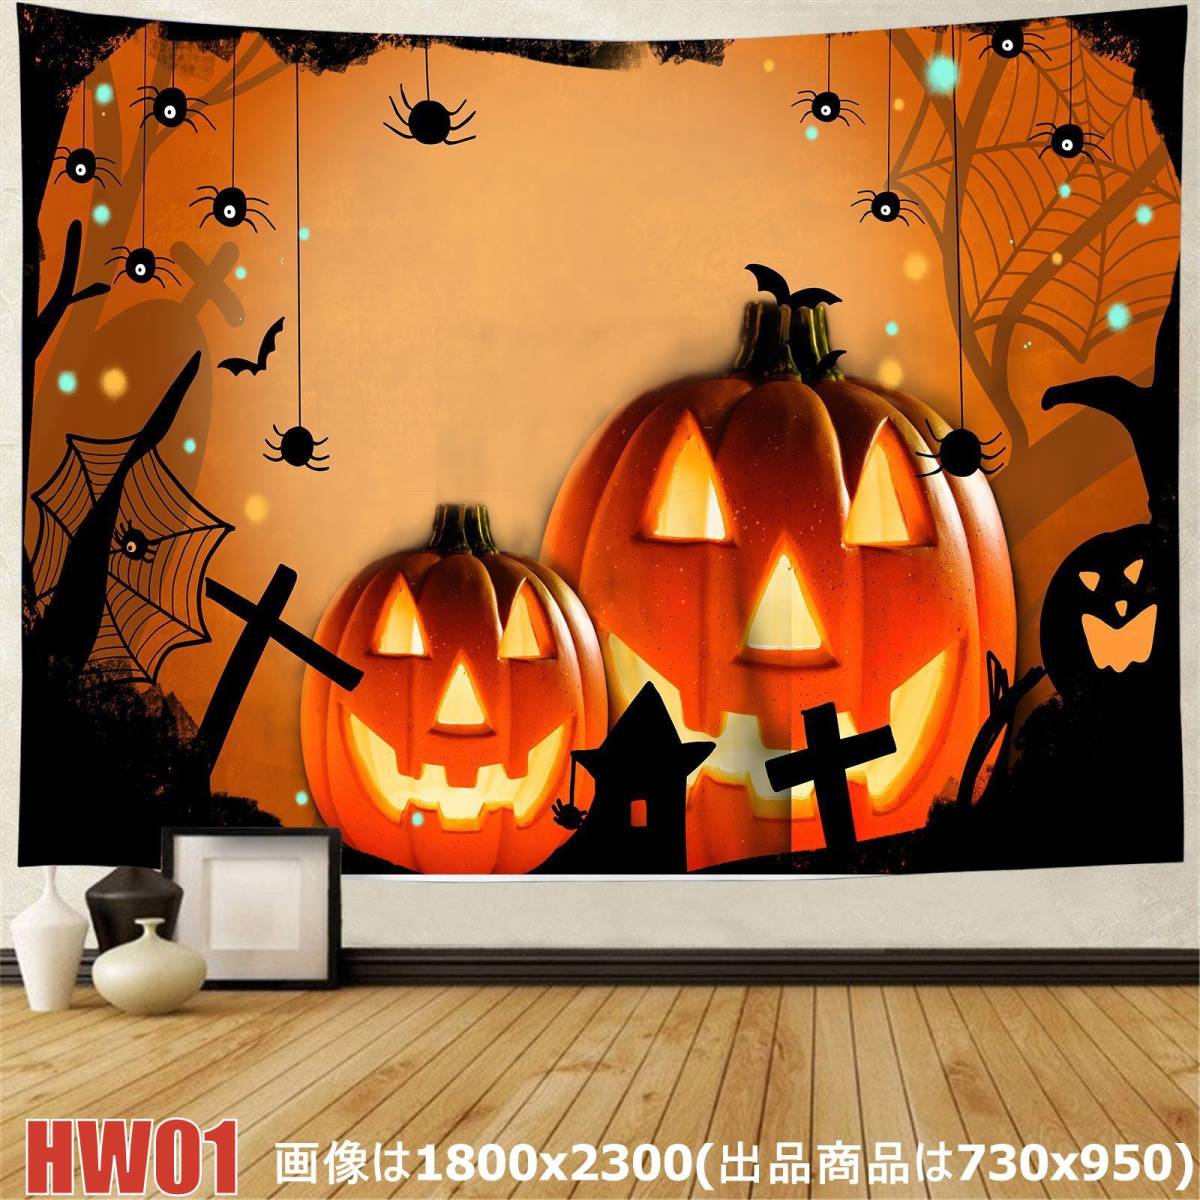 HW003 タペストリー ハロウィン かぼちゃ パーティー オバケ 魔女 壁飾り ポスター 930x950_画像2